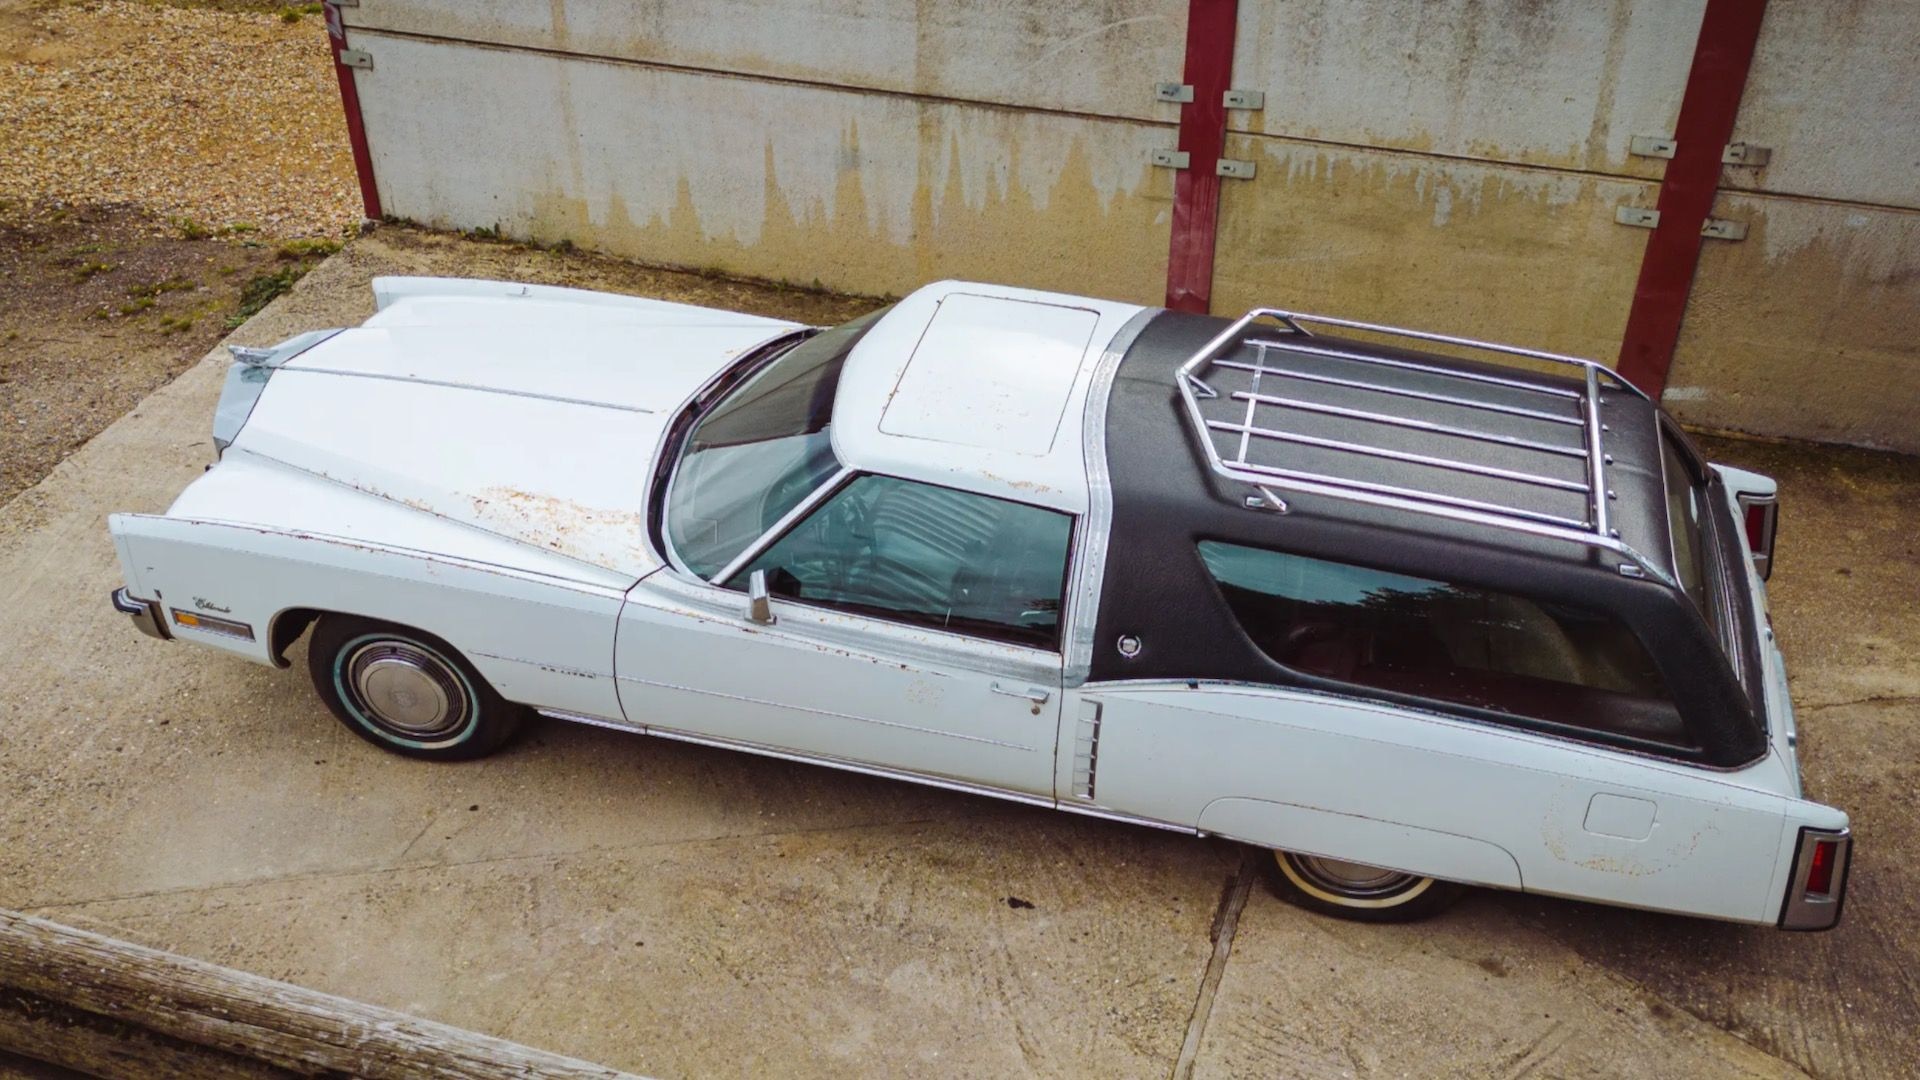 1972 Cadillac Eldorado wagon owned by Evel Knievel (photo via Bonhams)